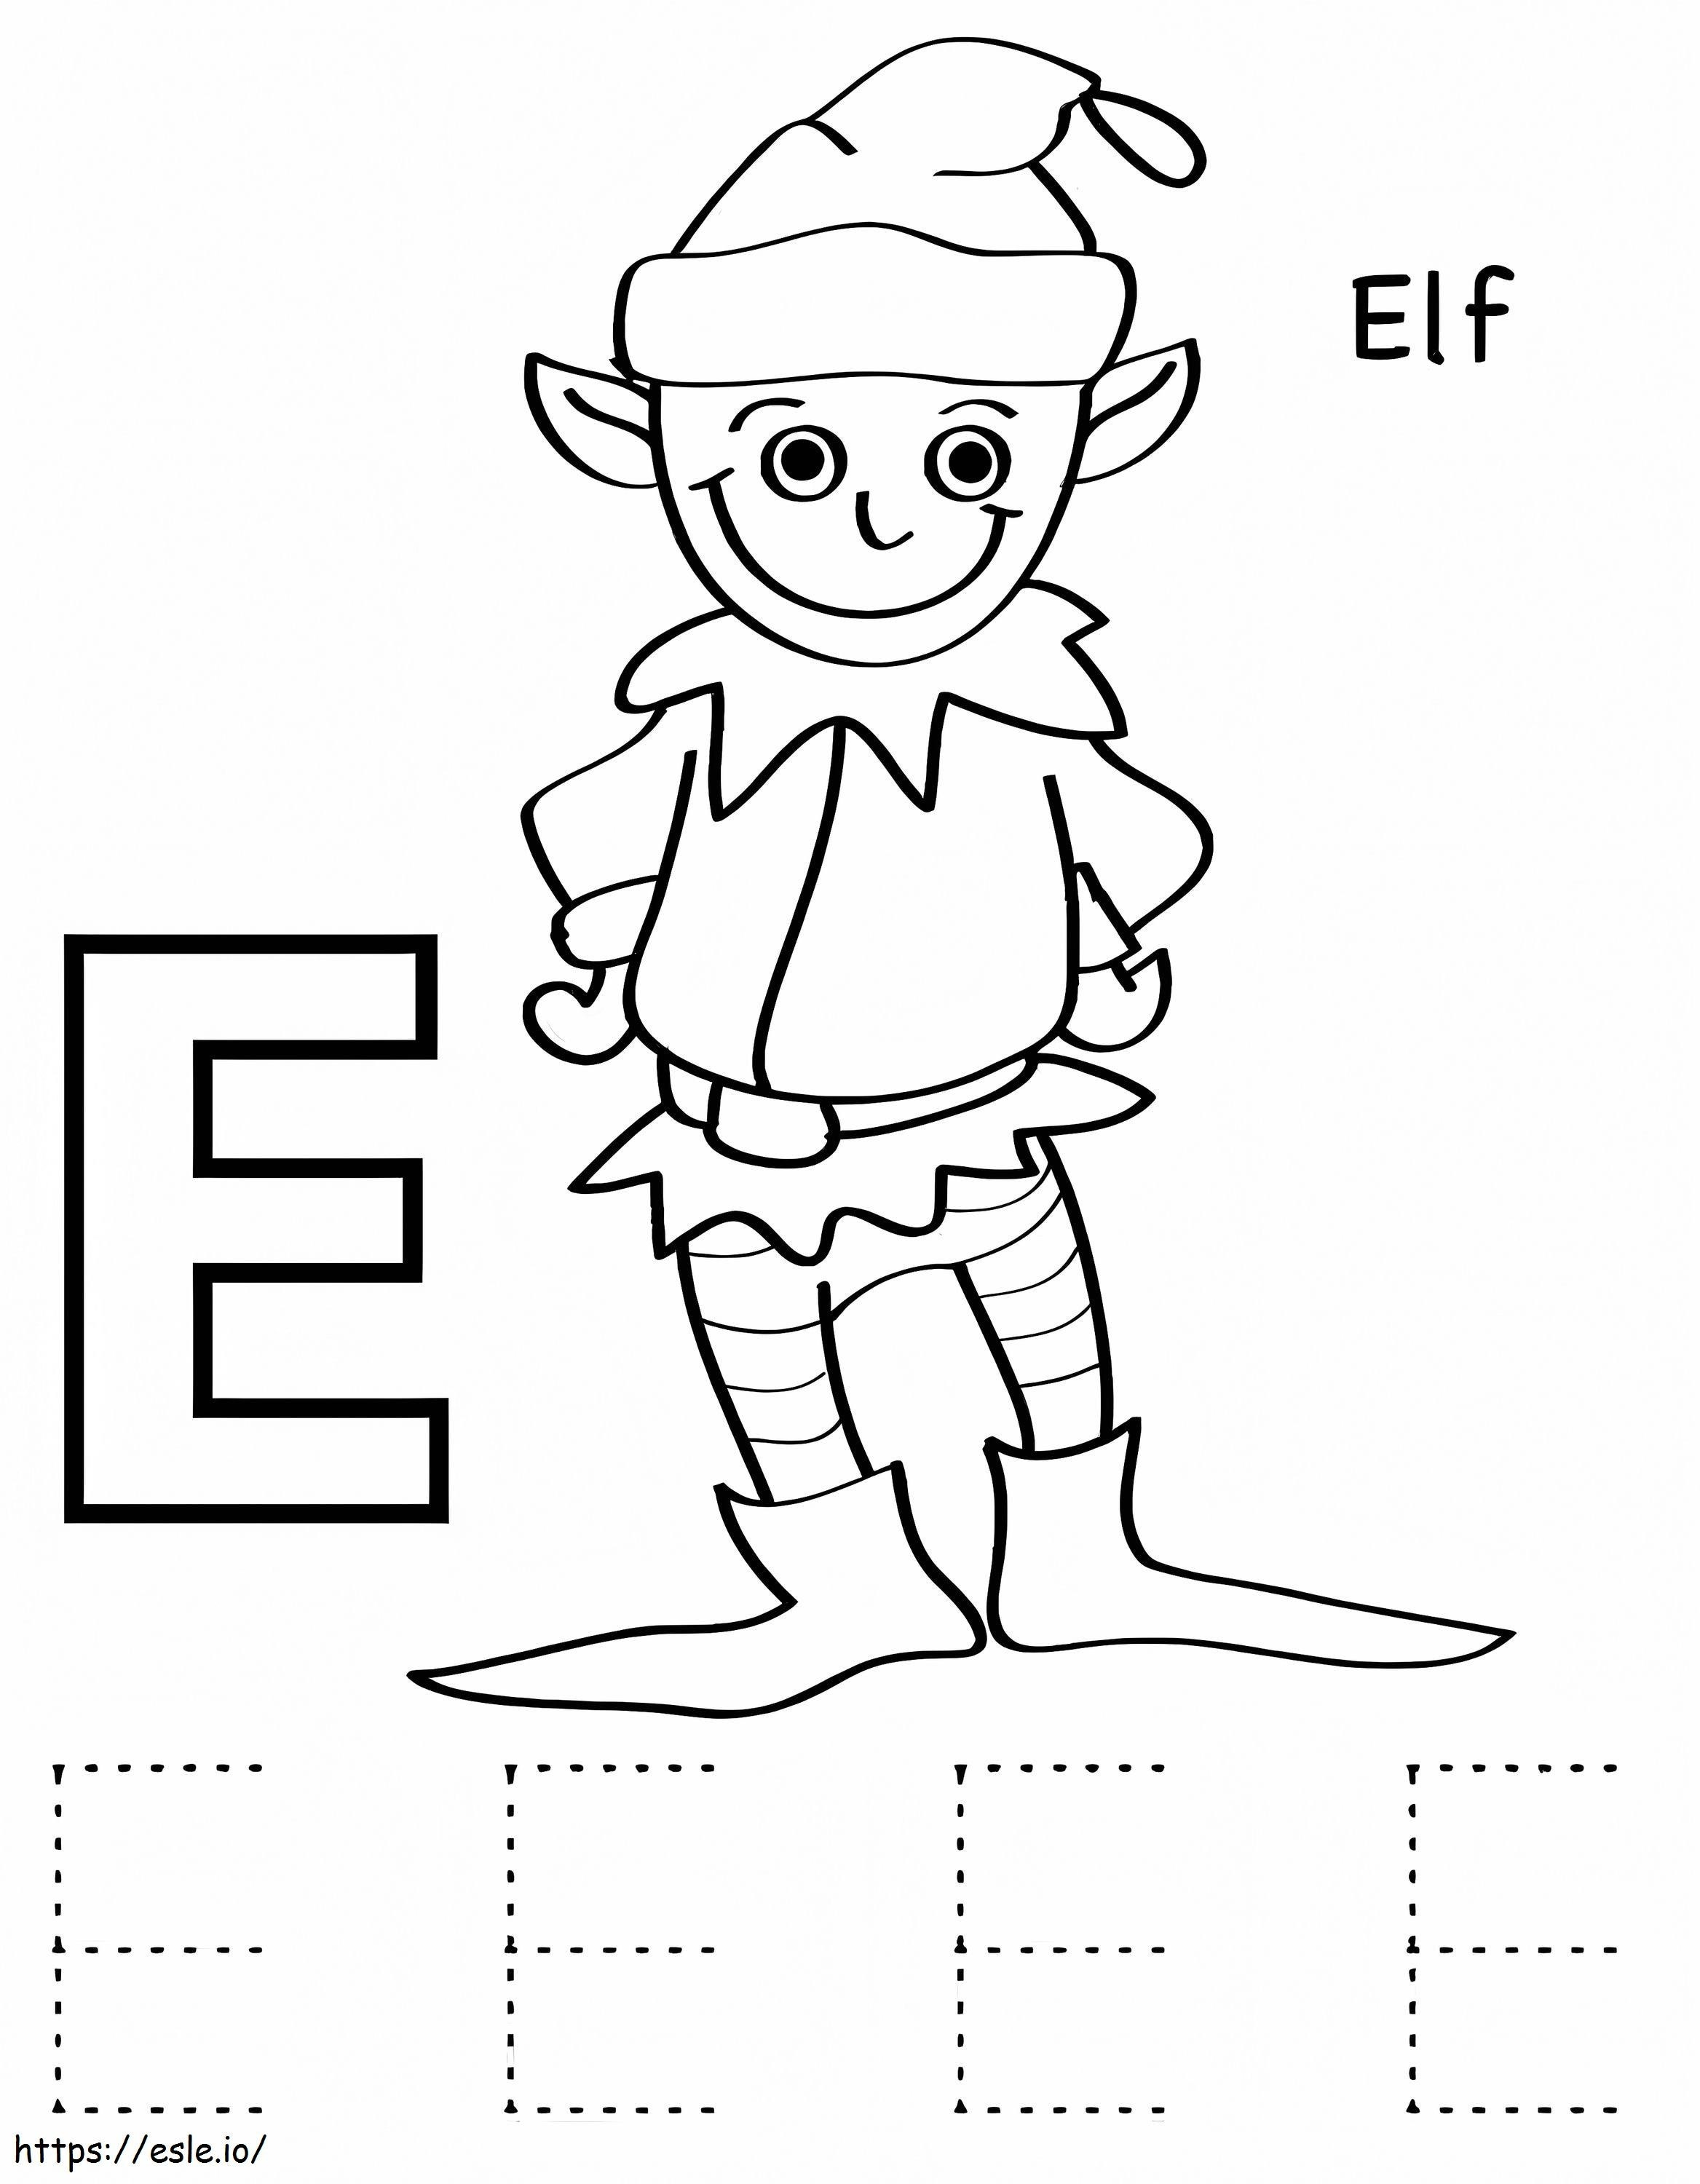 Elfenbuchstabe E ausmalbilder